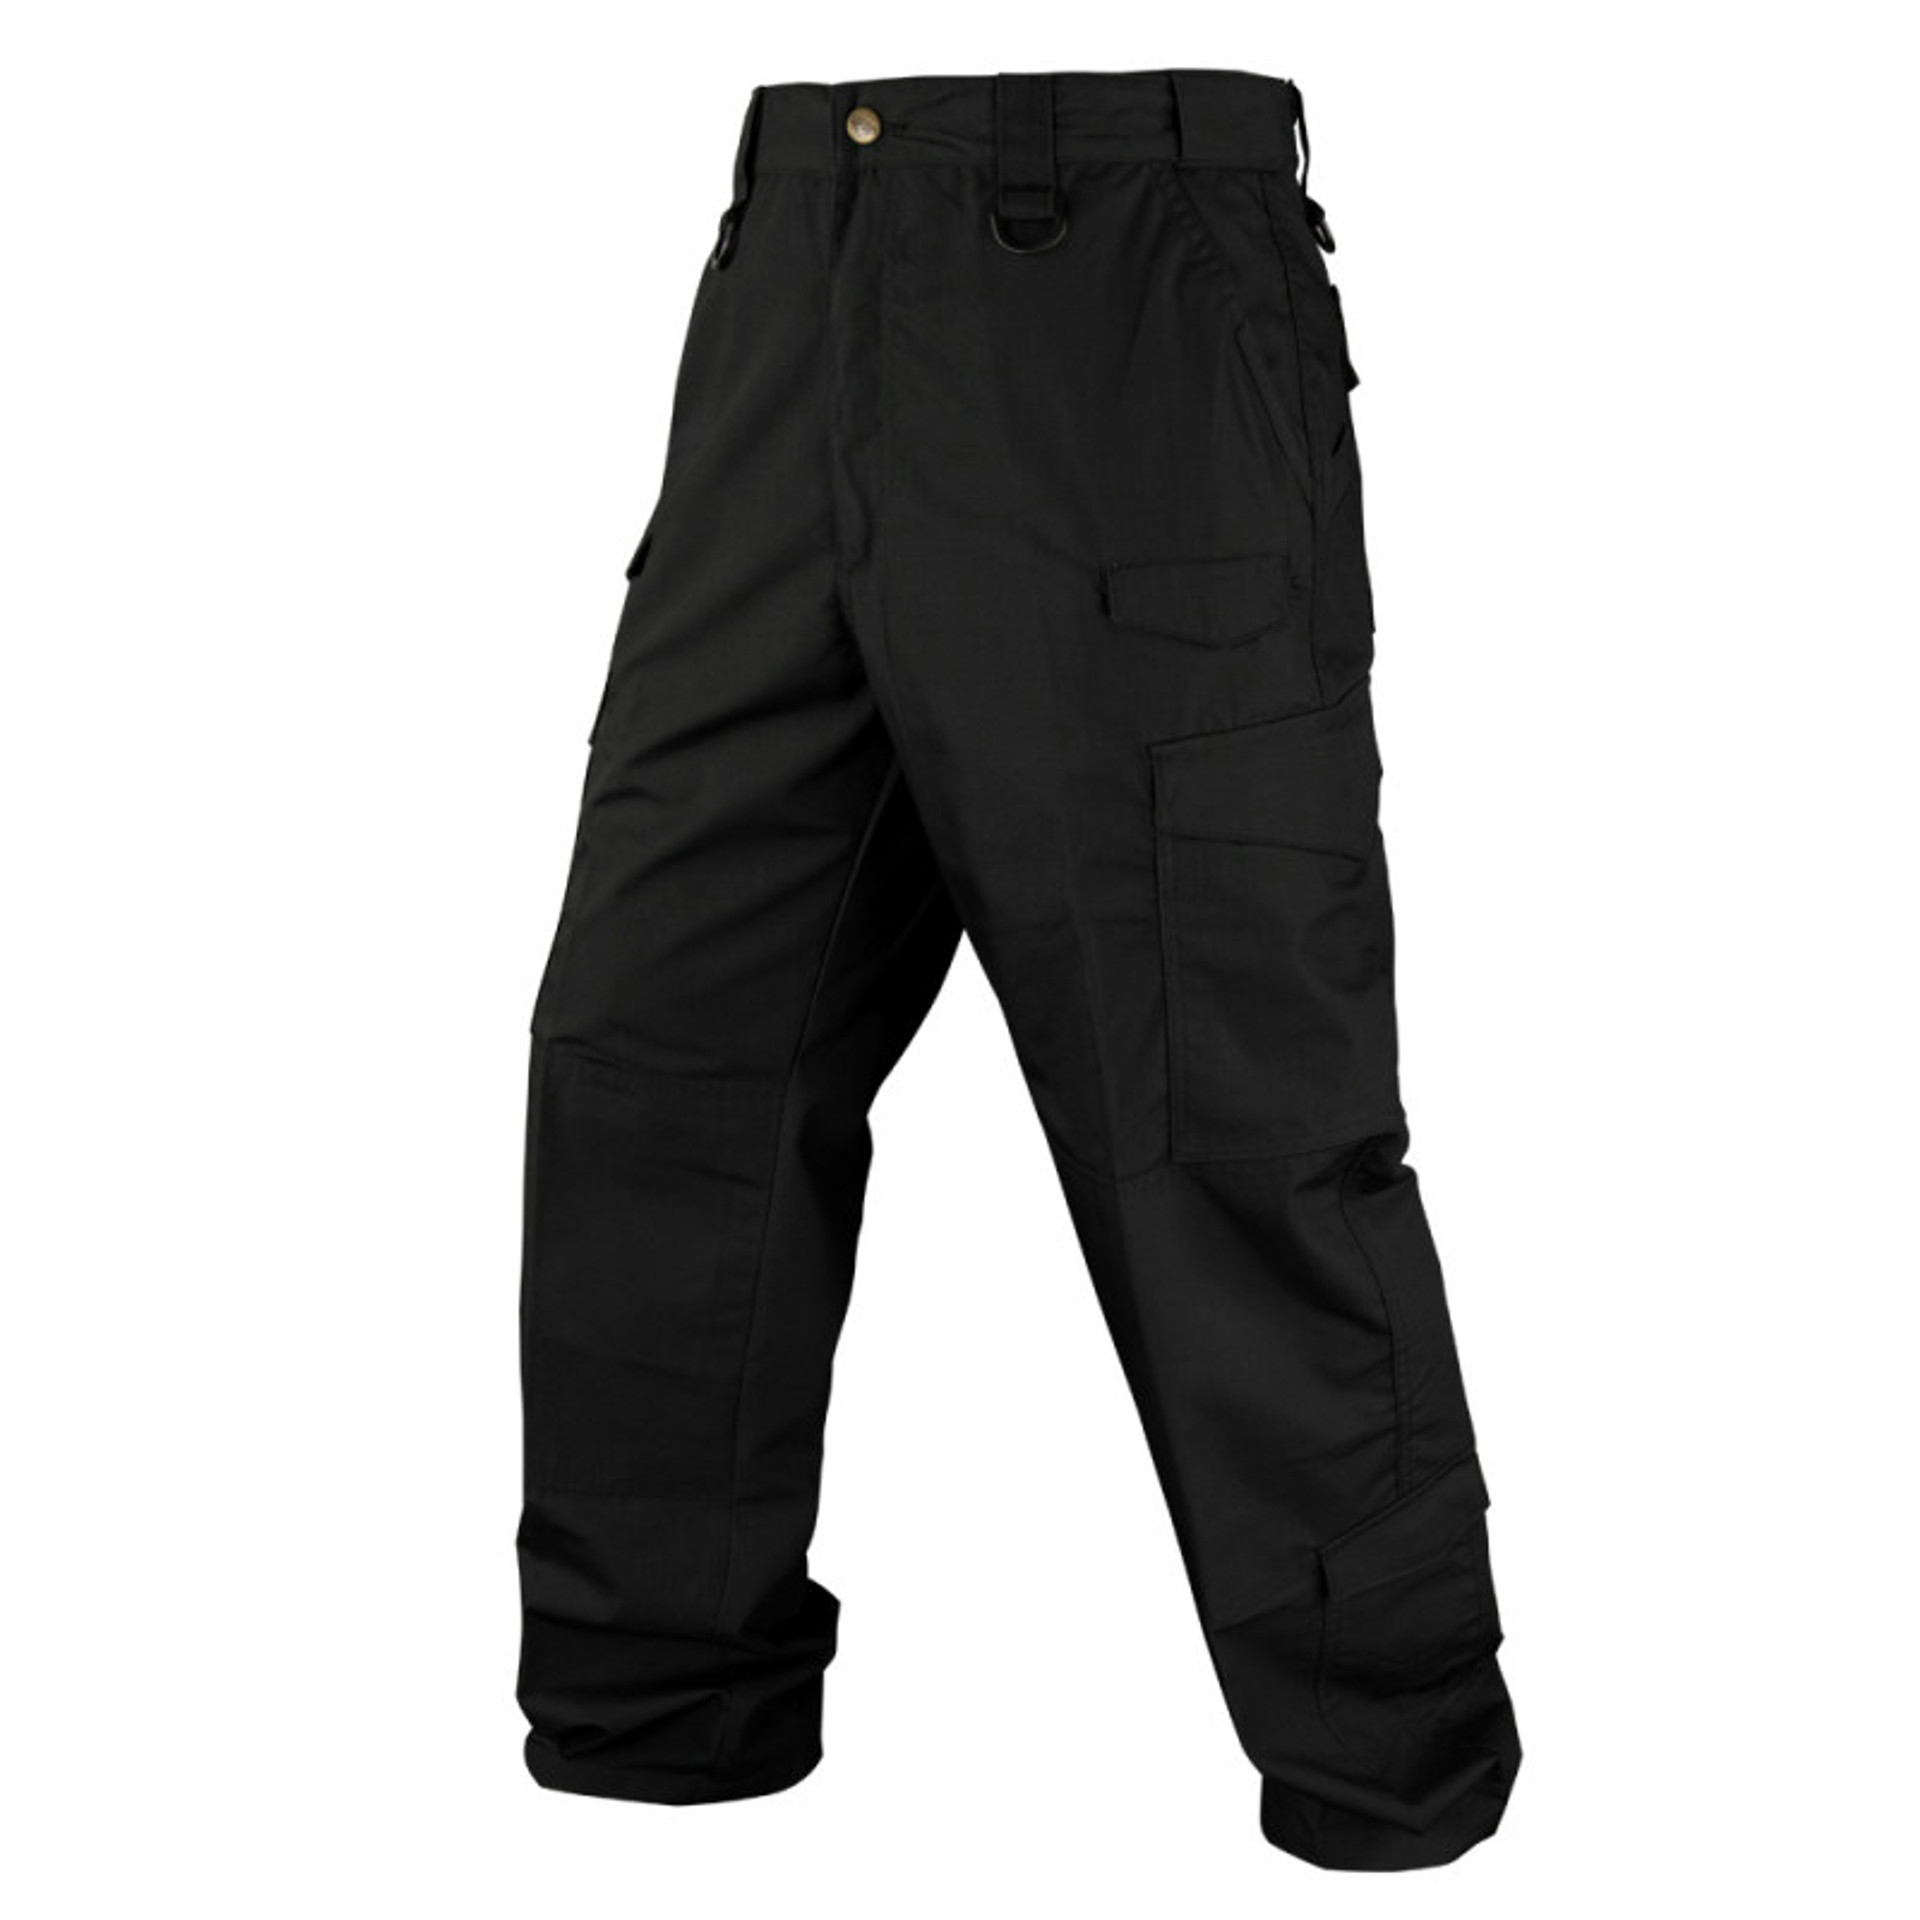 Condor 608 Sentinel Tactical Pants - Lawmen's Police Supply